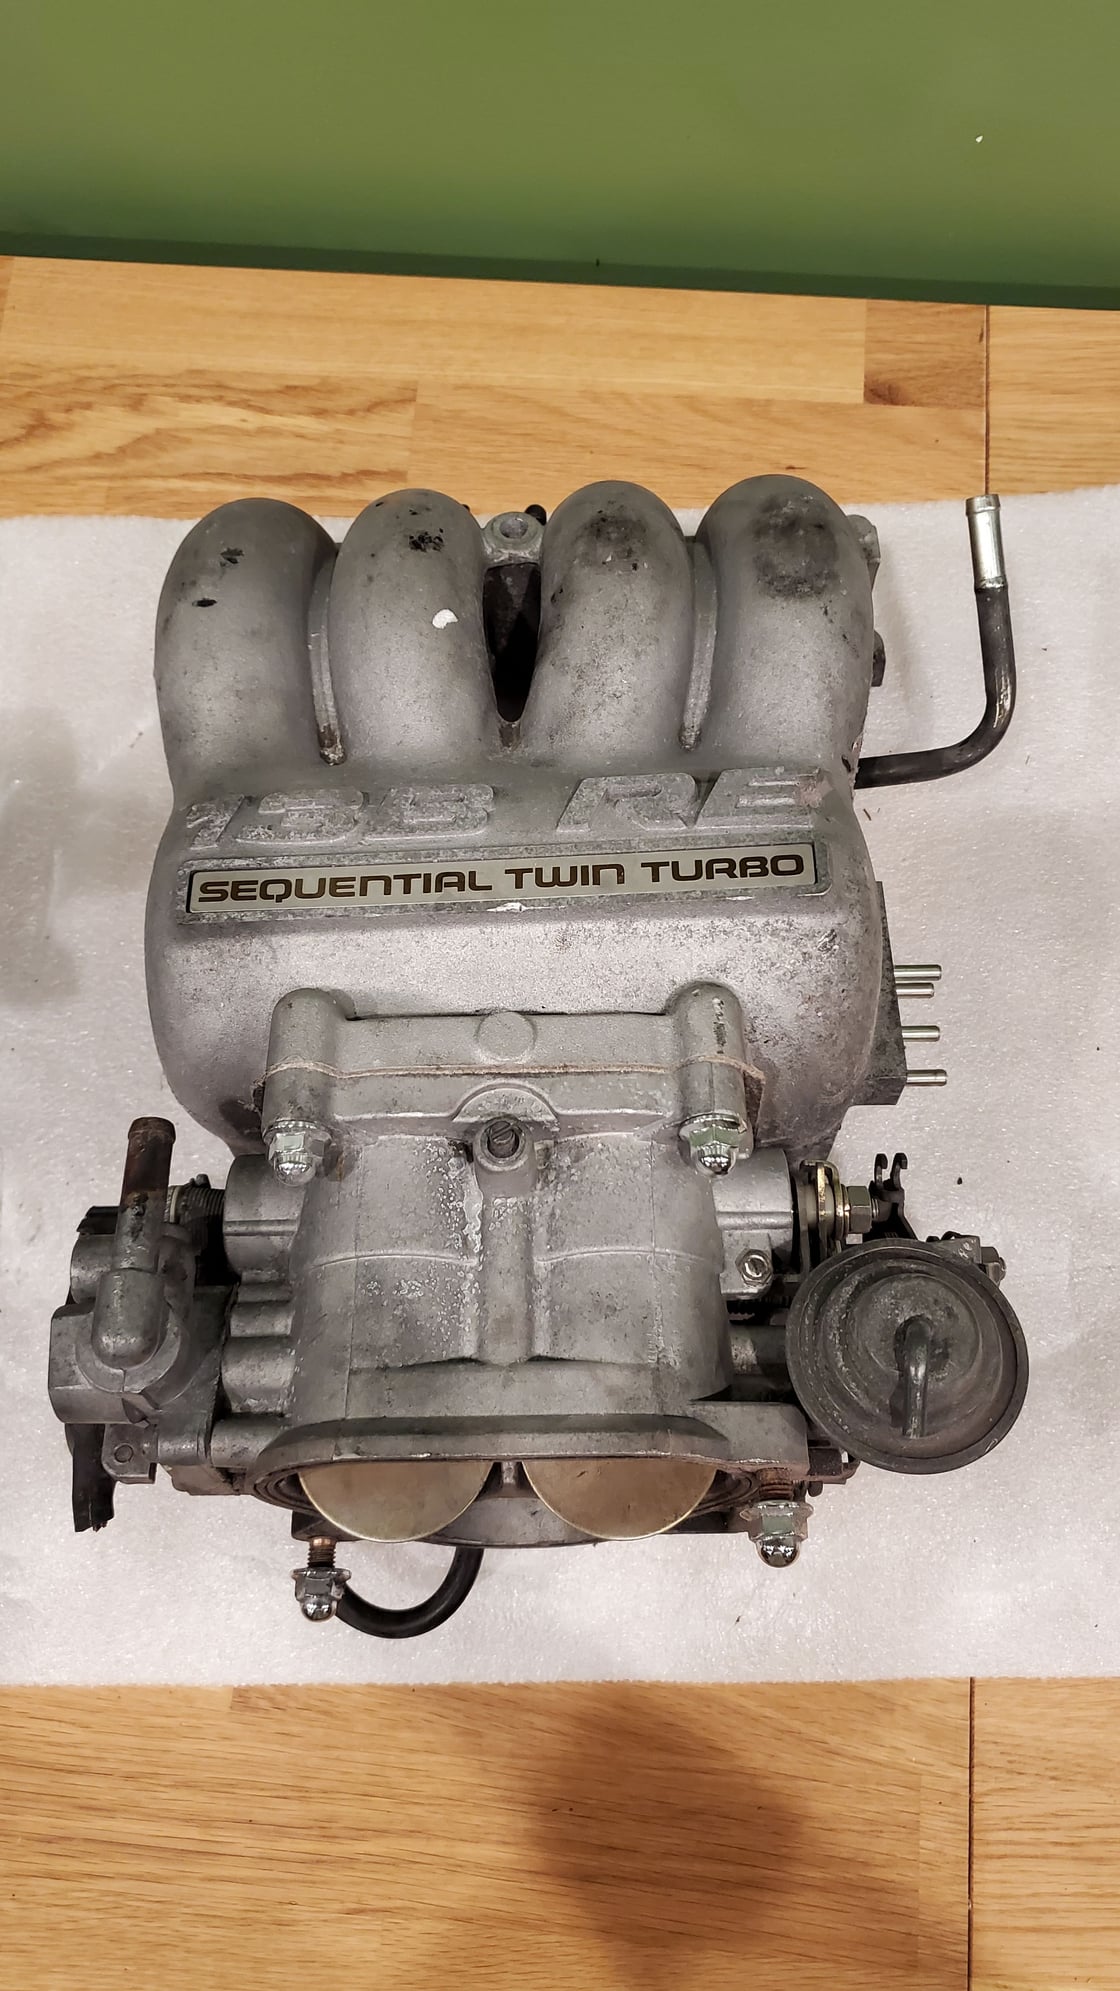 Engine - Intake/Fuel - 13b Cosmo complete intake manifold - Used - 1992 to 1999 Mazda RX-7 - Acworth, GA 30102, United States